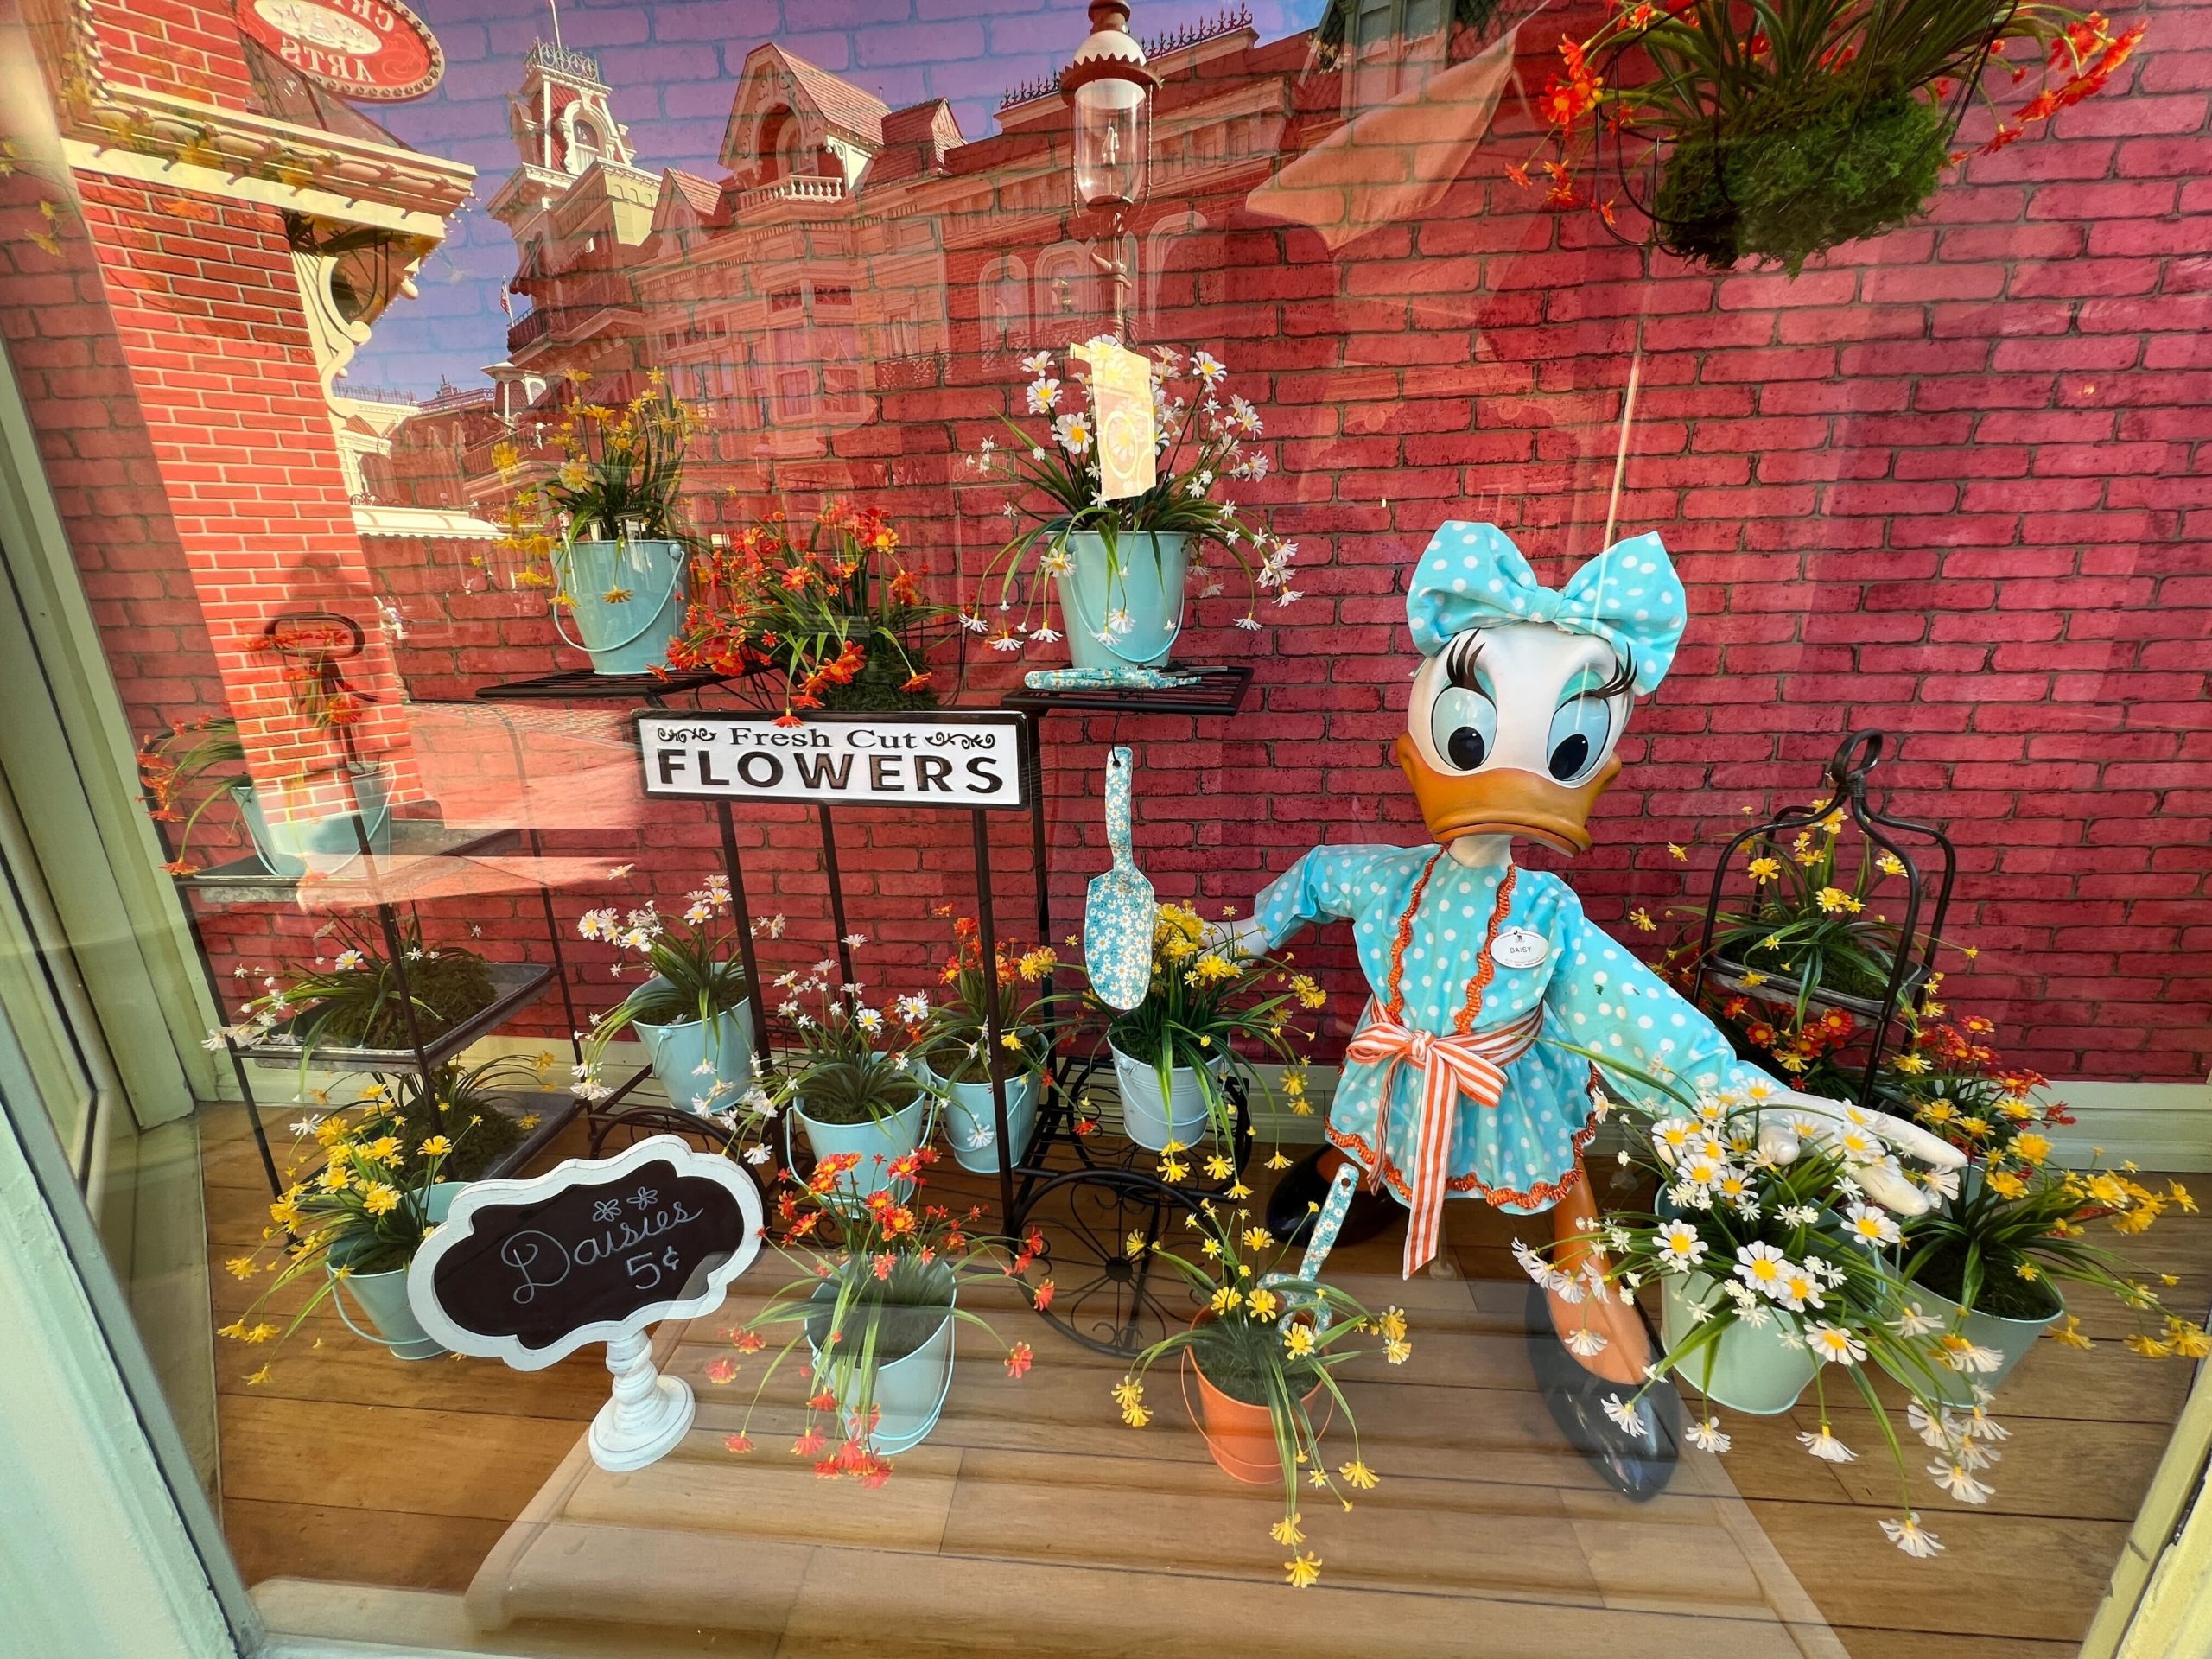 https://mickeyblog.com/wp-content/uploads/2023/01/2023-wdw-Magic-Kingdom-Main-Street-USA-Daisy-Flower-Shop-Display-scaled.jpg